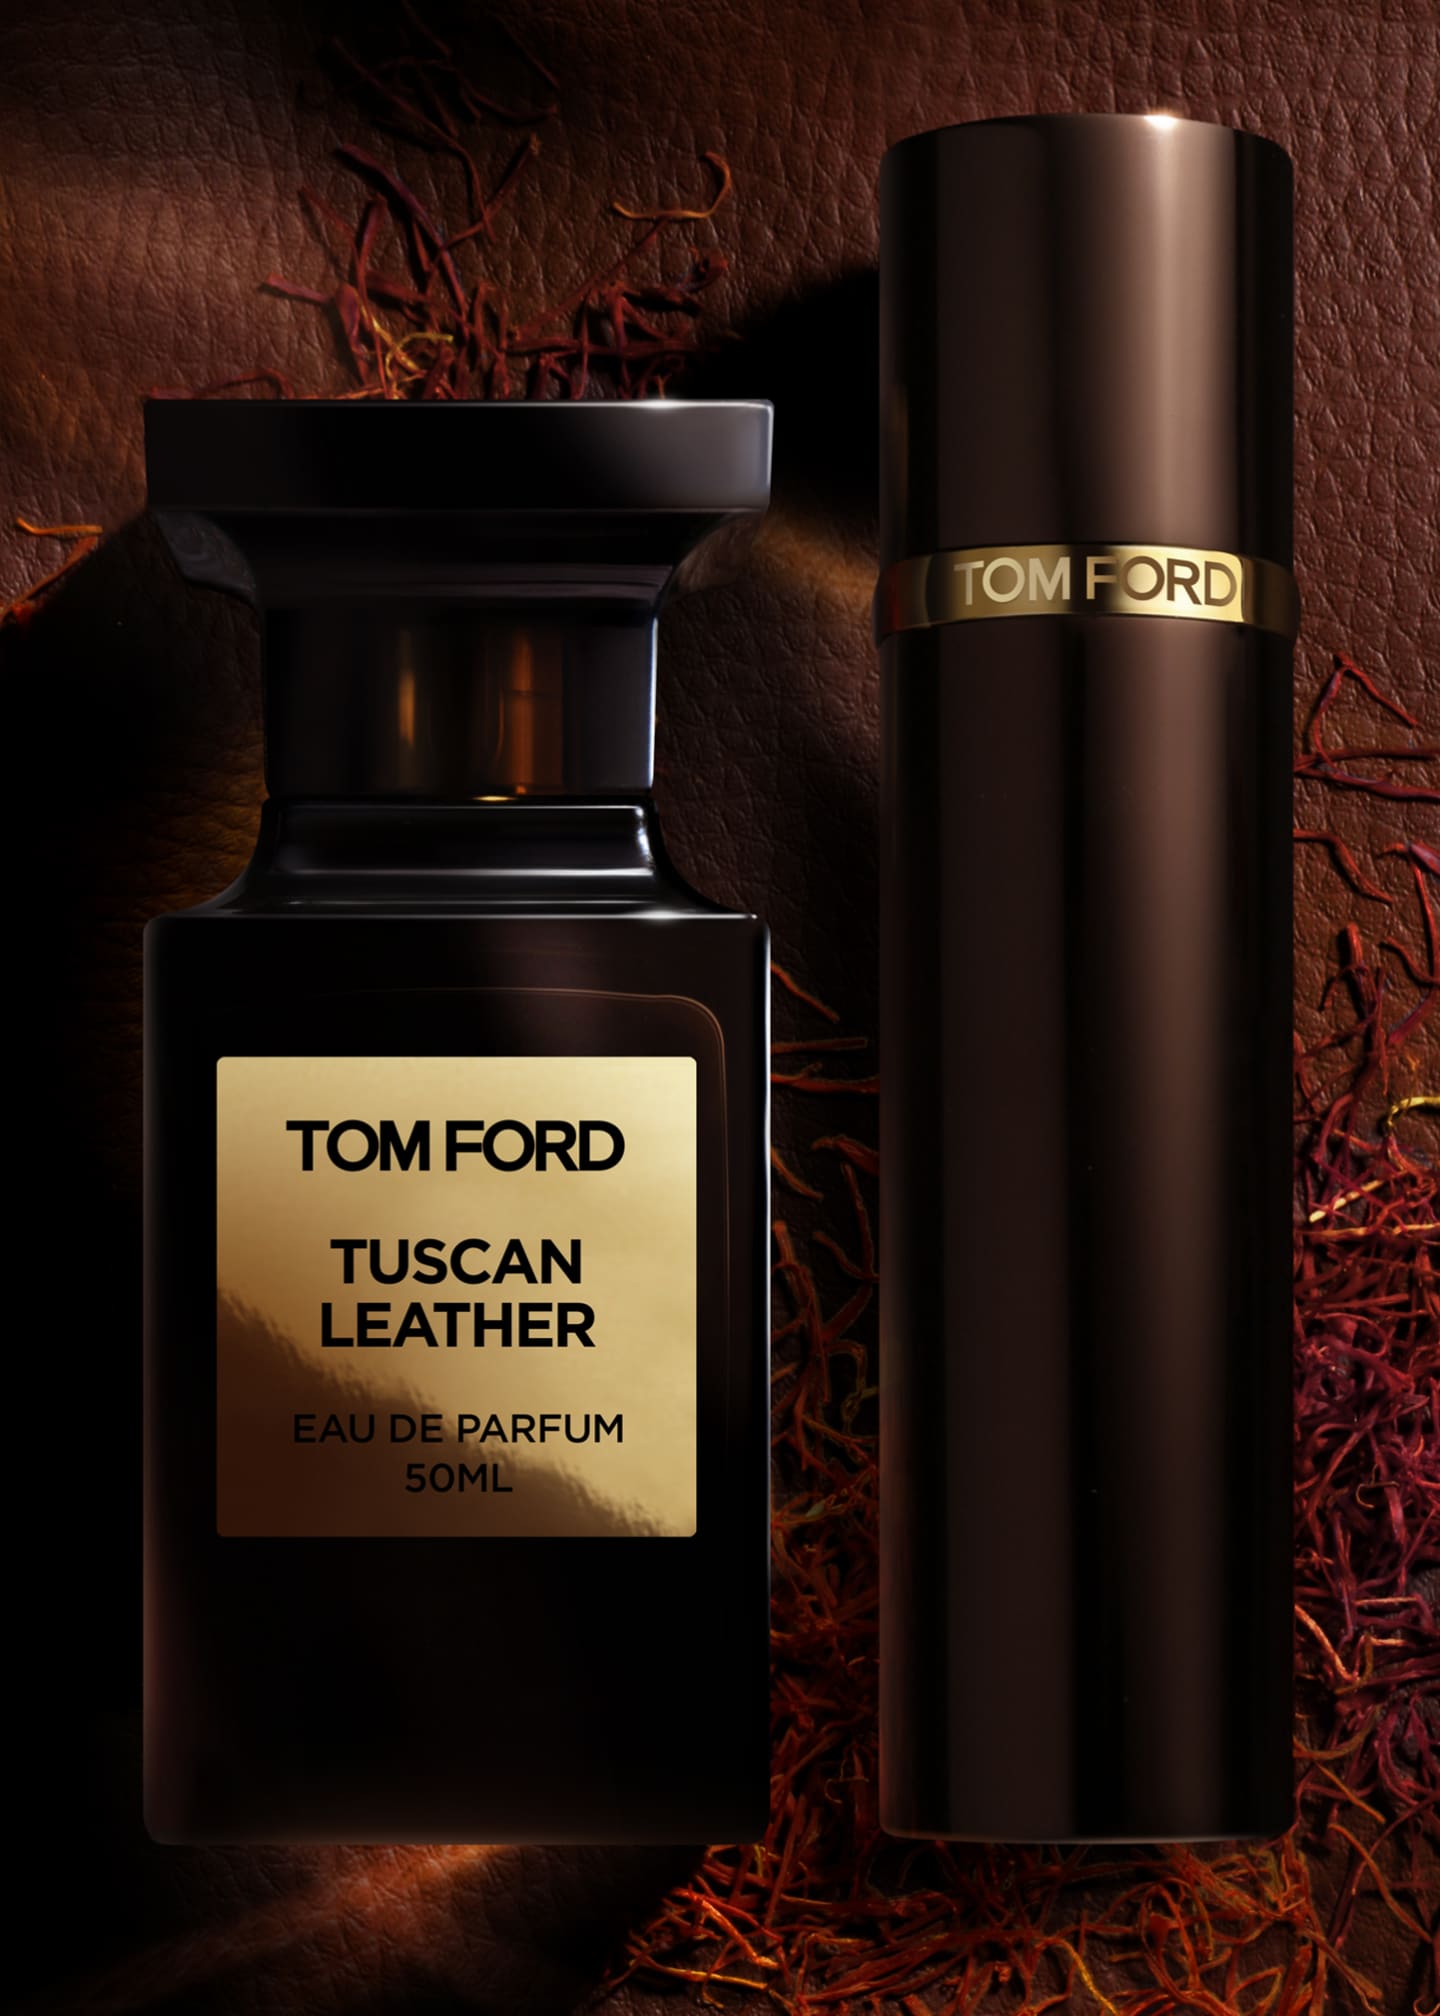 TOM FORD Tuscan Leather Eau de Parfum Fragrance, 1.7 oz - Bergdorf Goodman